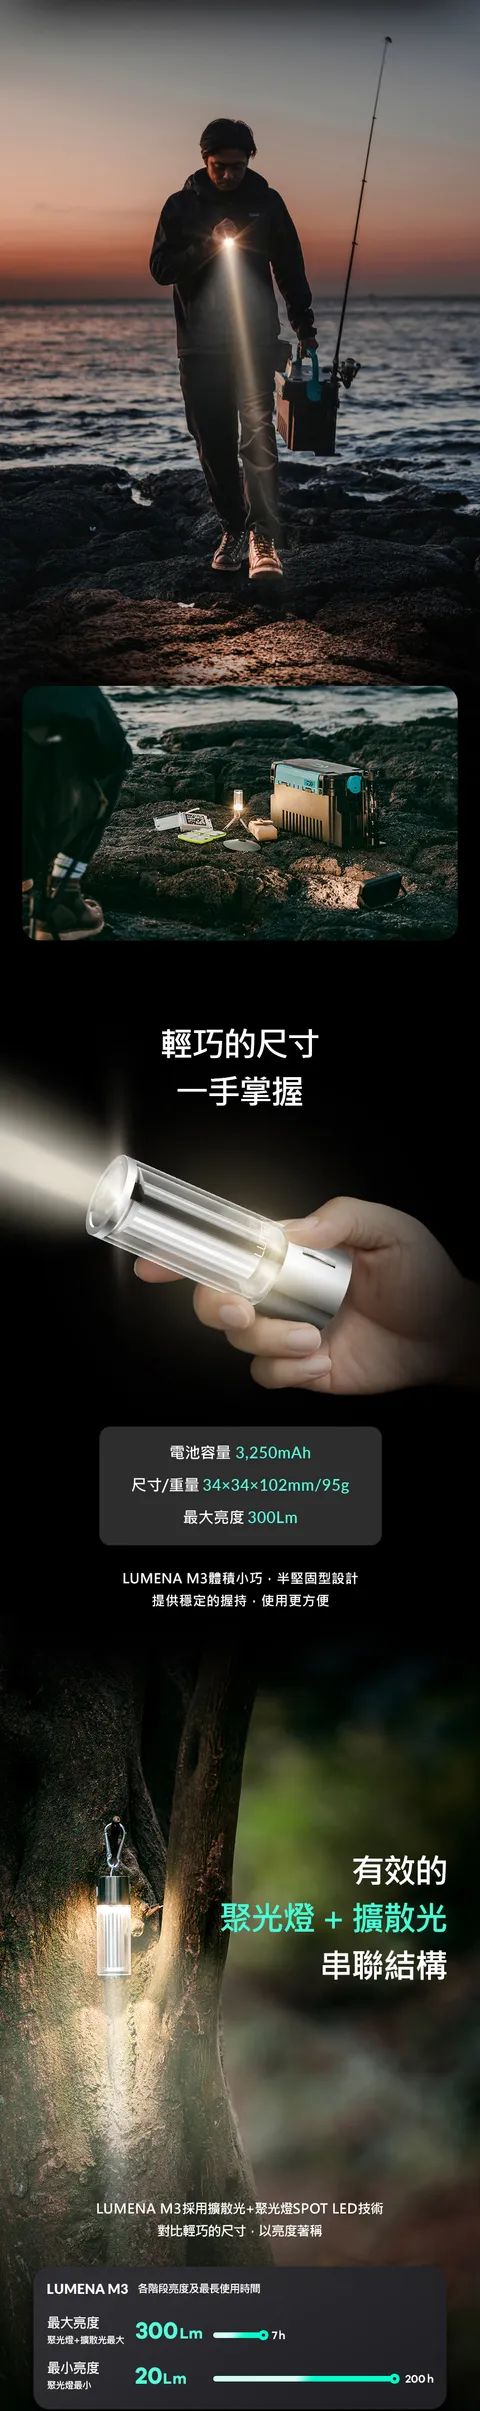 【N9】LUMENA M3 多功能LED燈 N9新力作